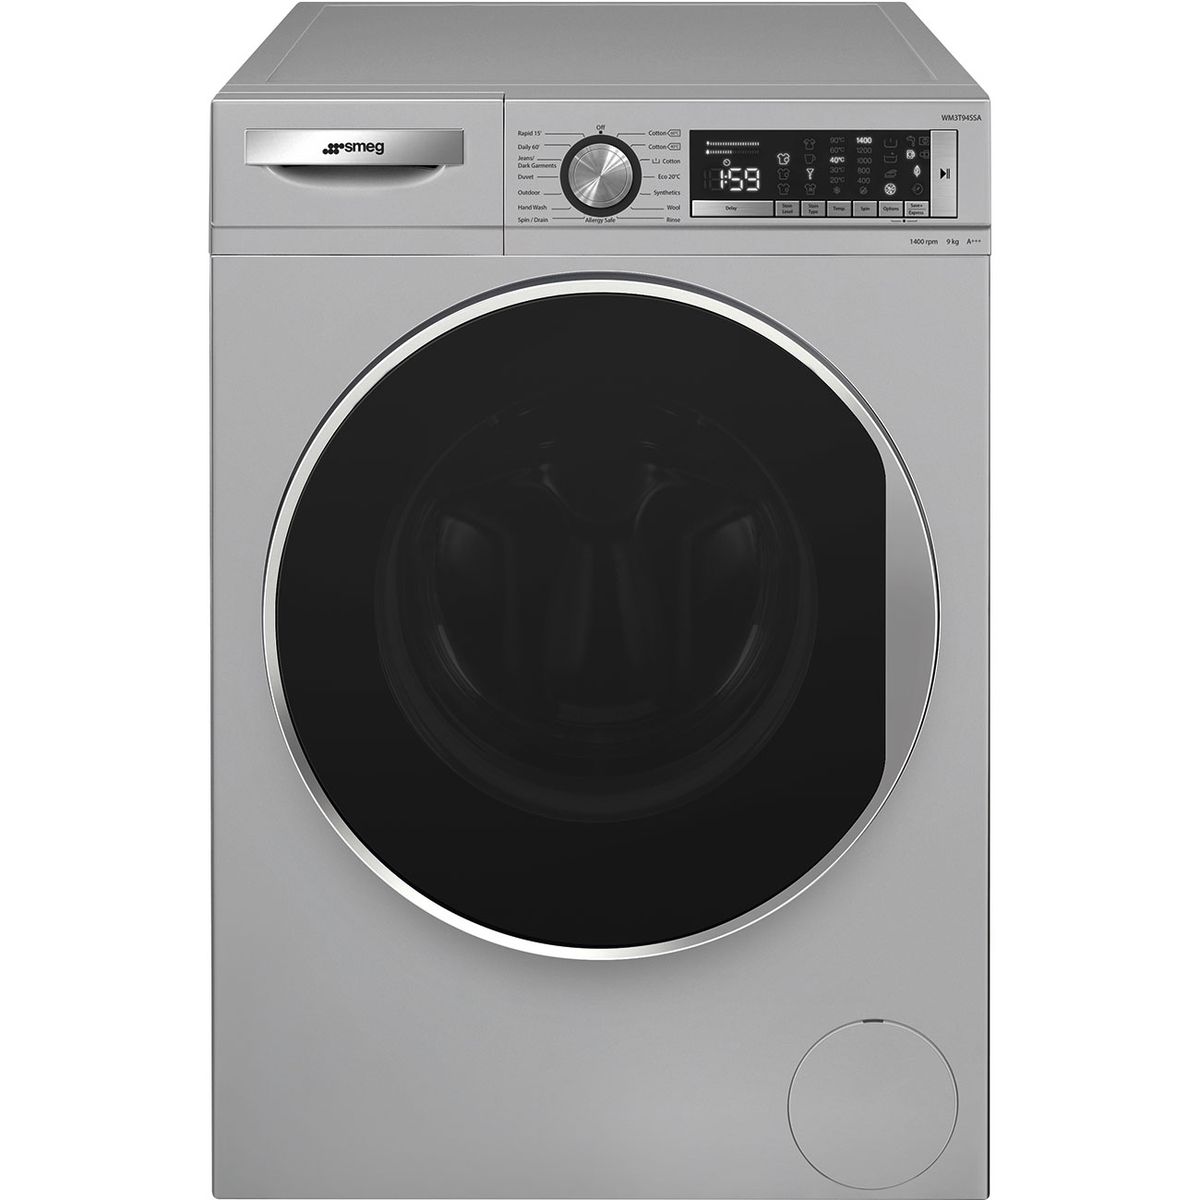 Smeg-Washing Machine Free-standing 9 kg Silver